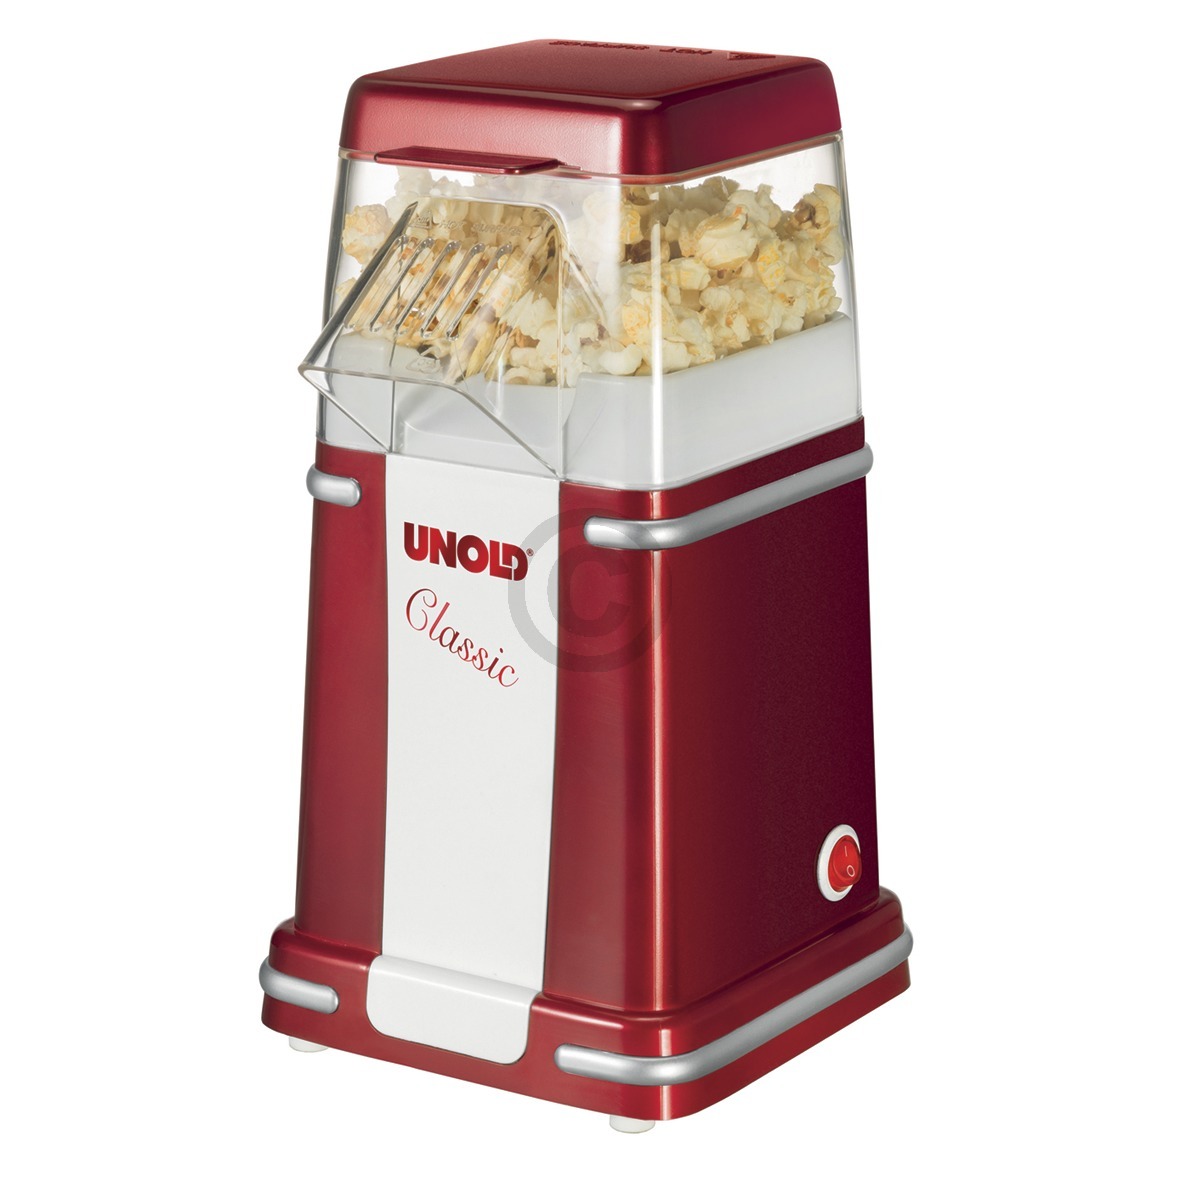 Popcornmaker UNOLD 48525 Classic RotMetallic silber - benötigt kein Öl -